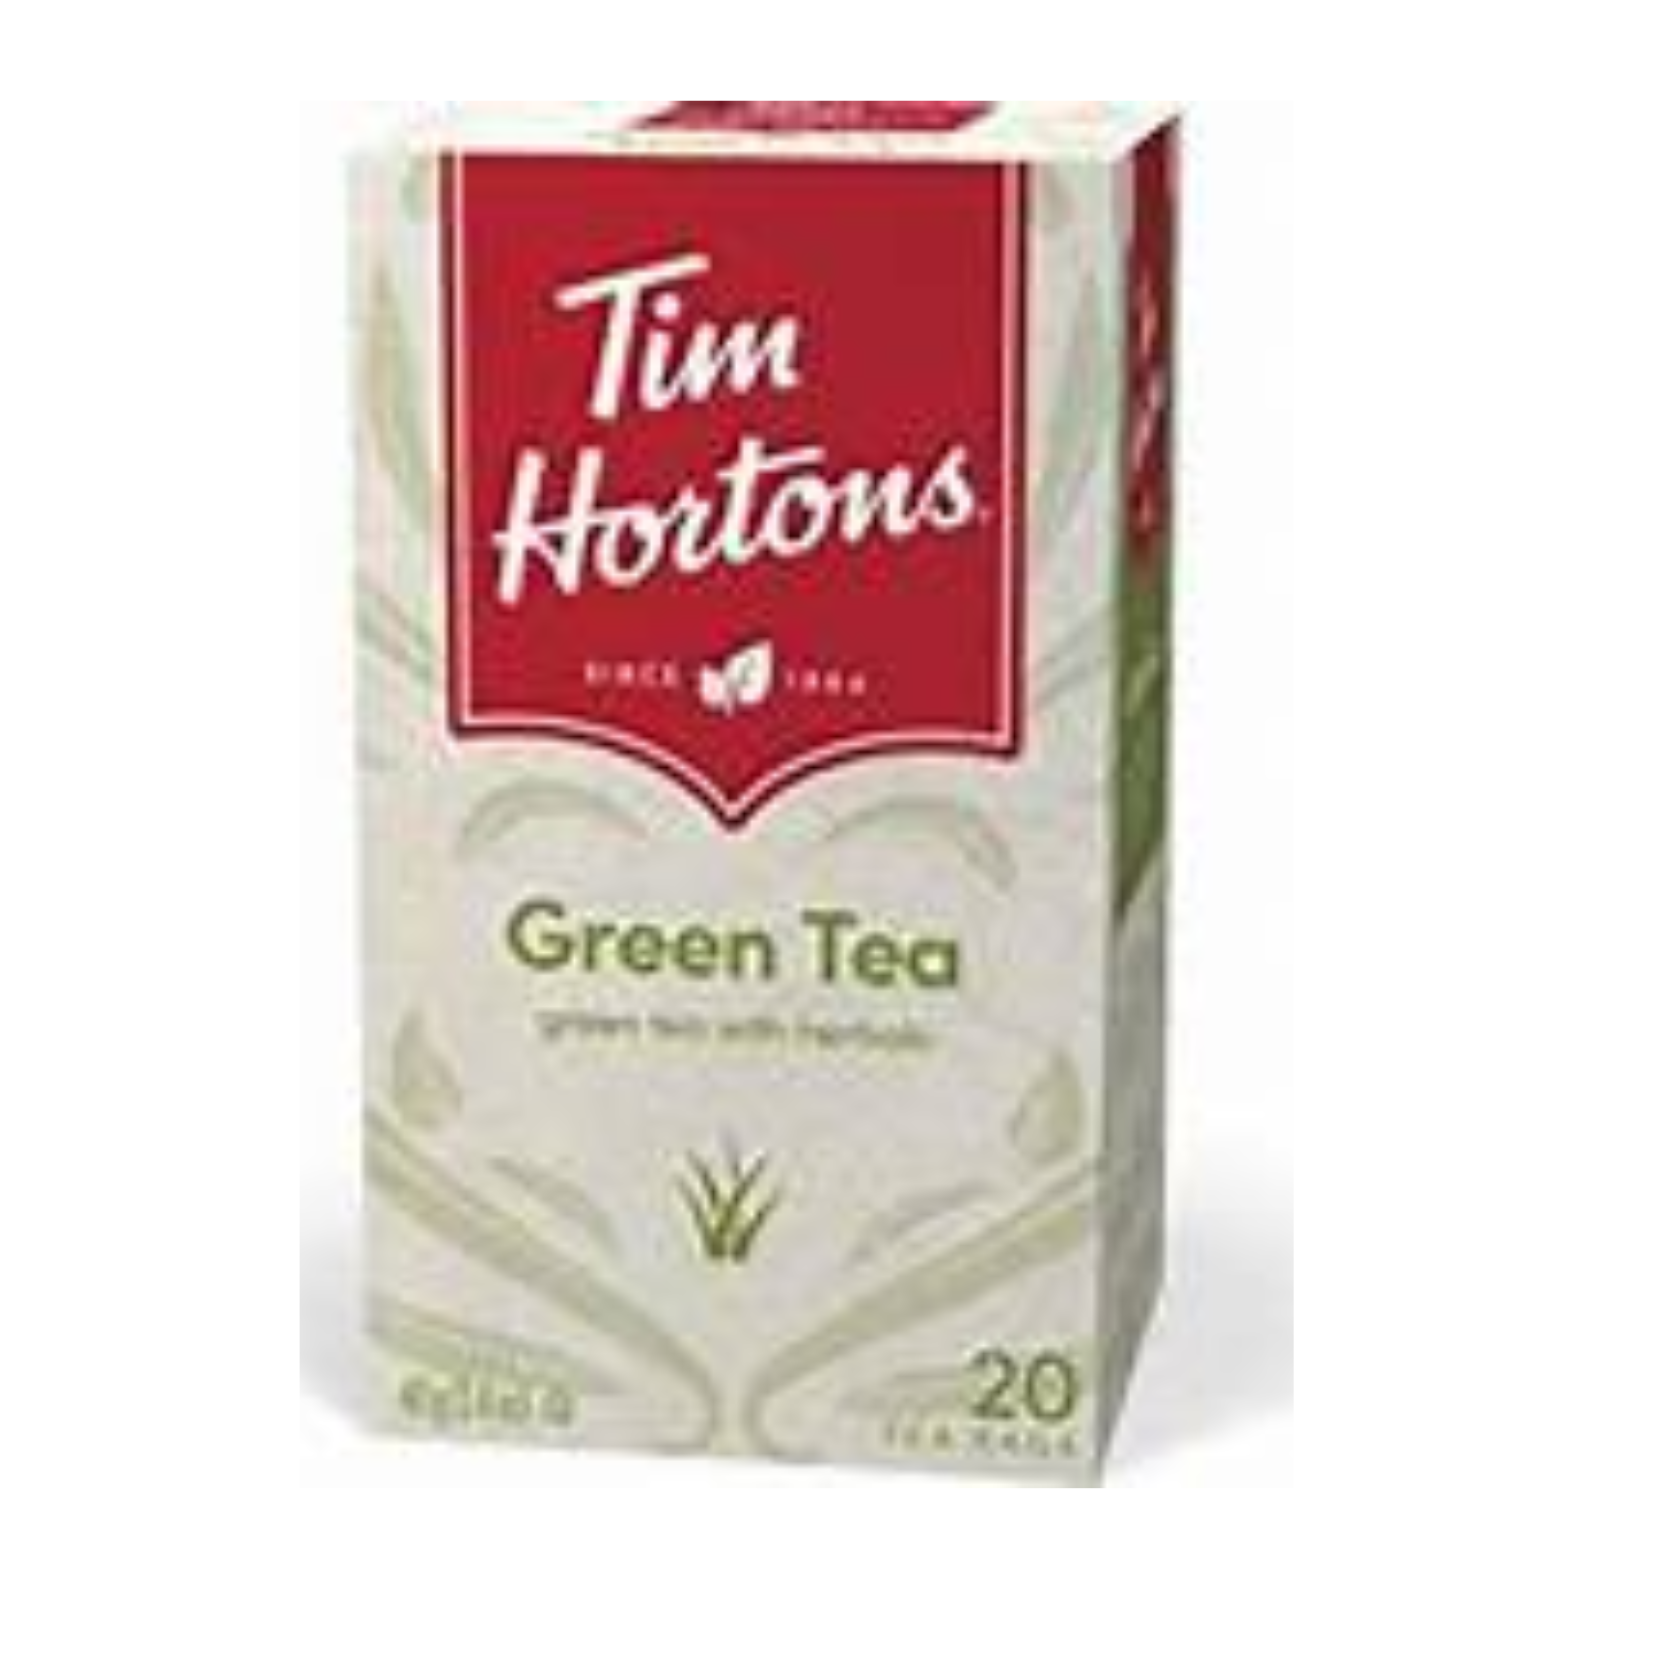 Tim Hortons Green Tea 20ct